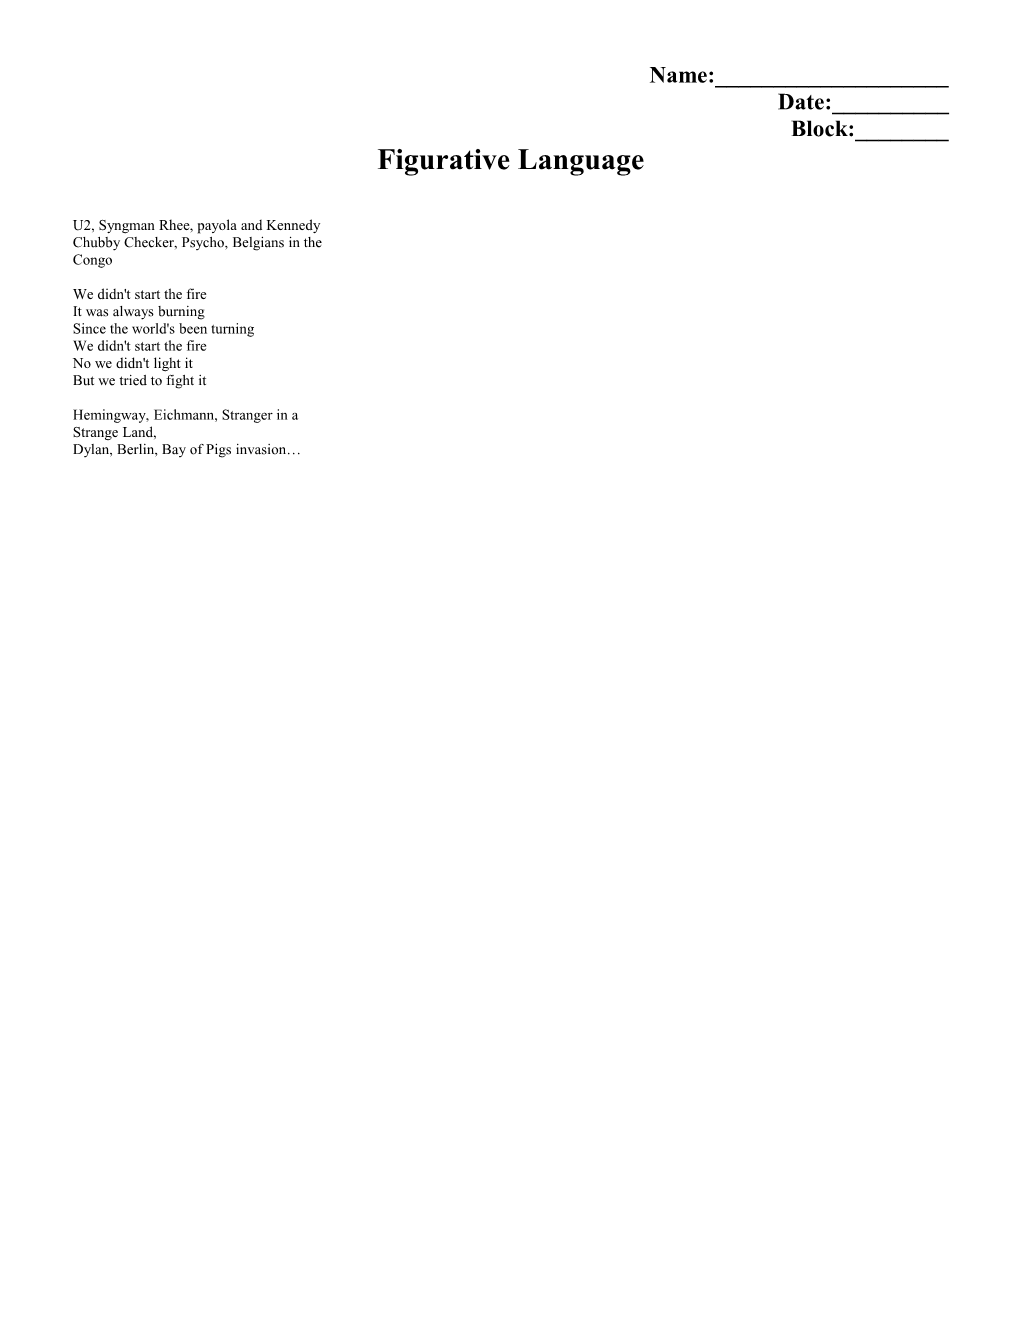 Figurative Language s2